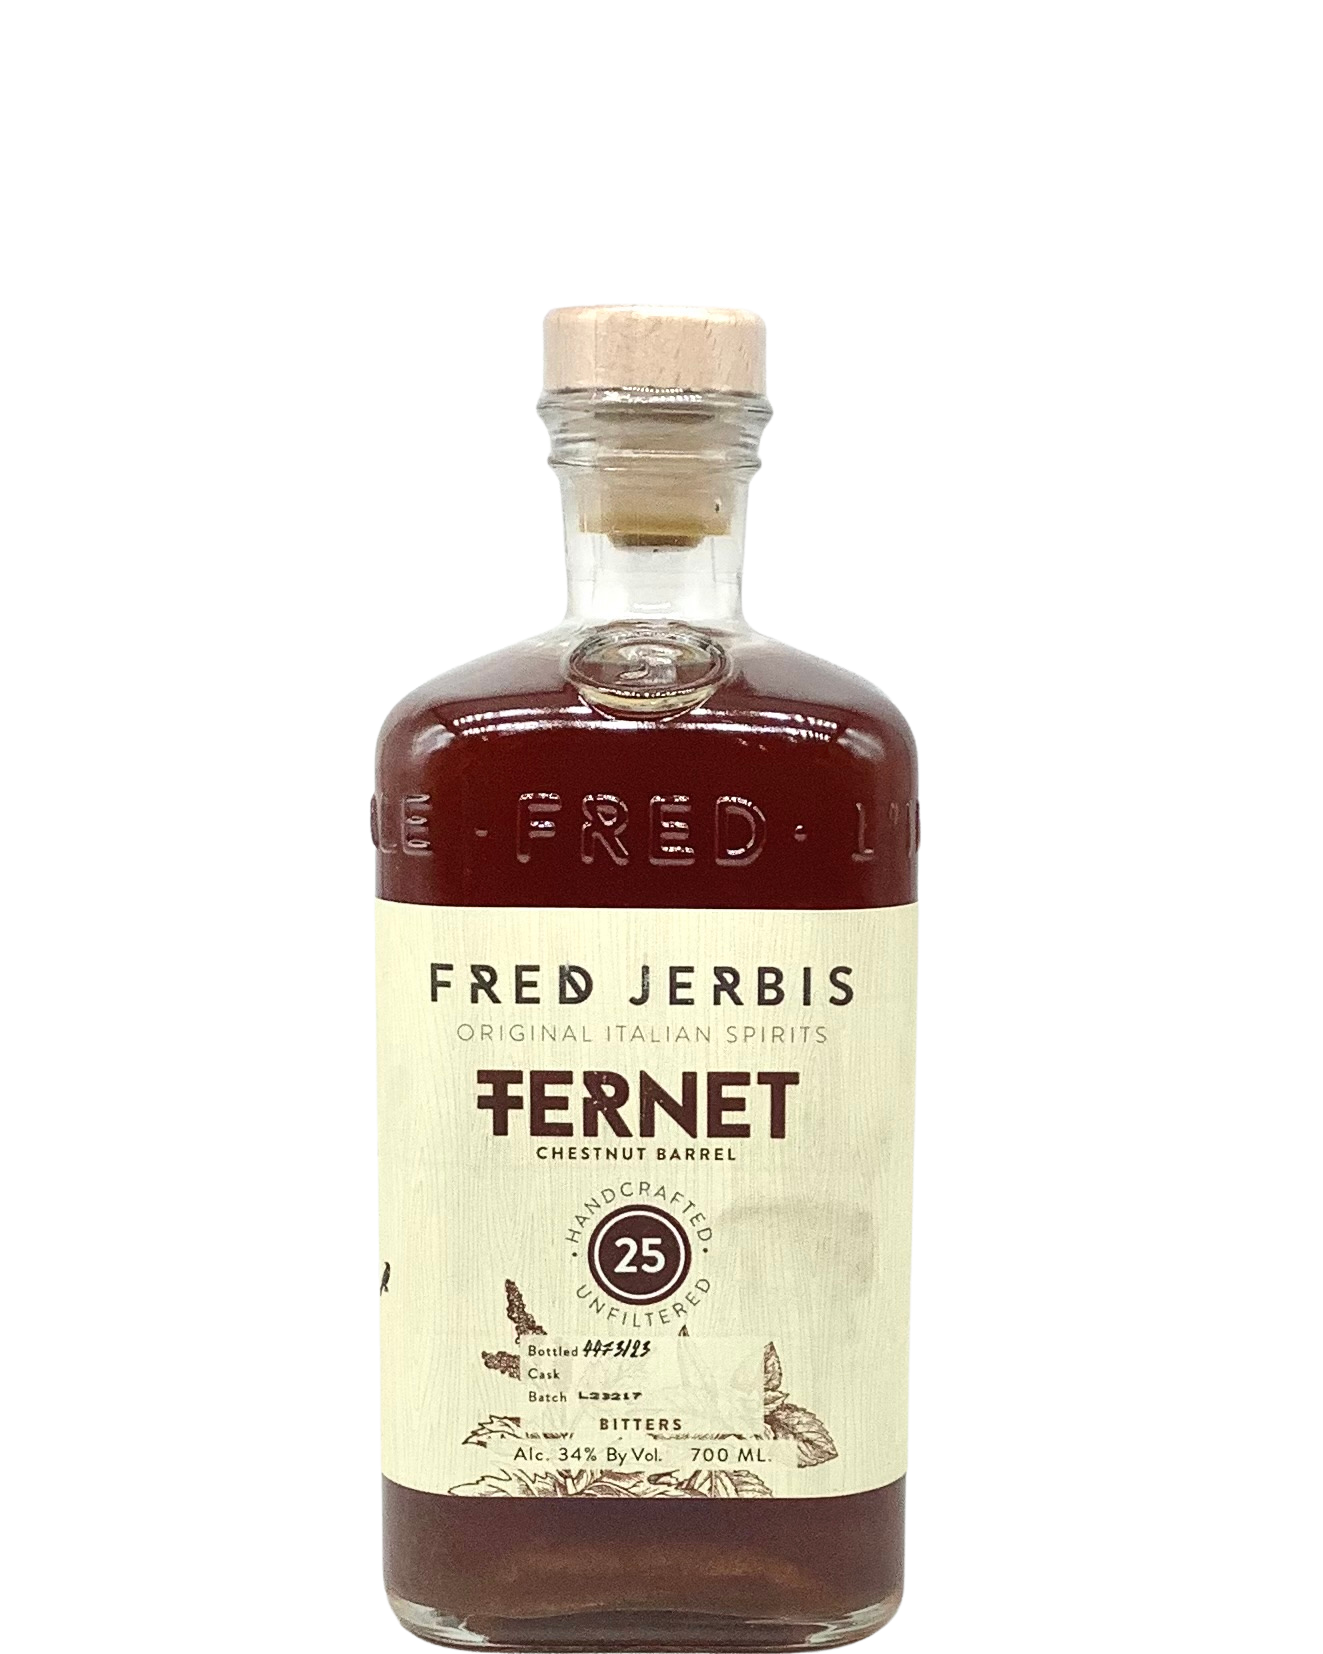 Fred Jerbis Fernet 700ml newarrival